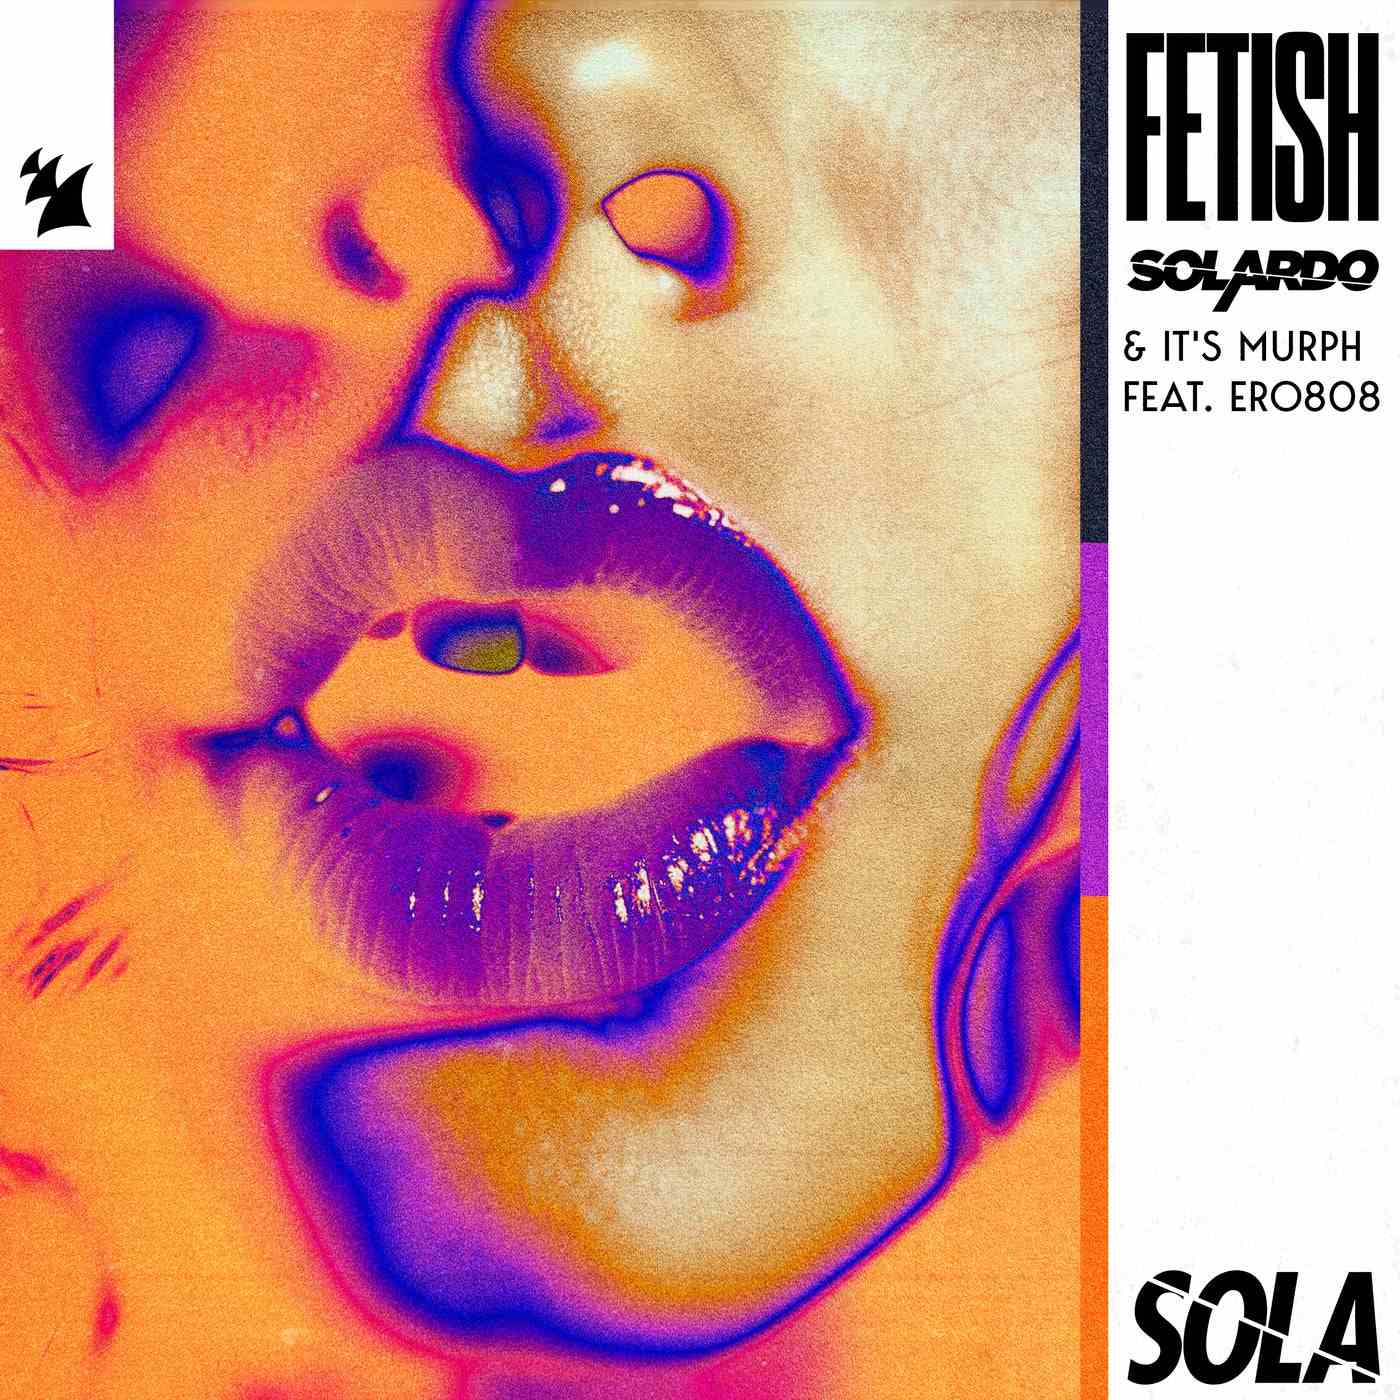 Solardo, Ero808, it's murph - Fetish feat. ero808 (Extended Mix)